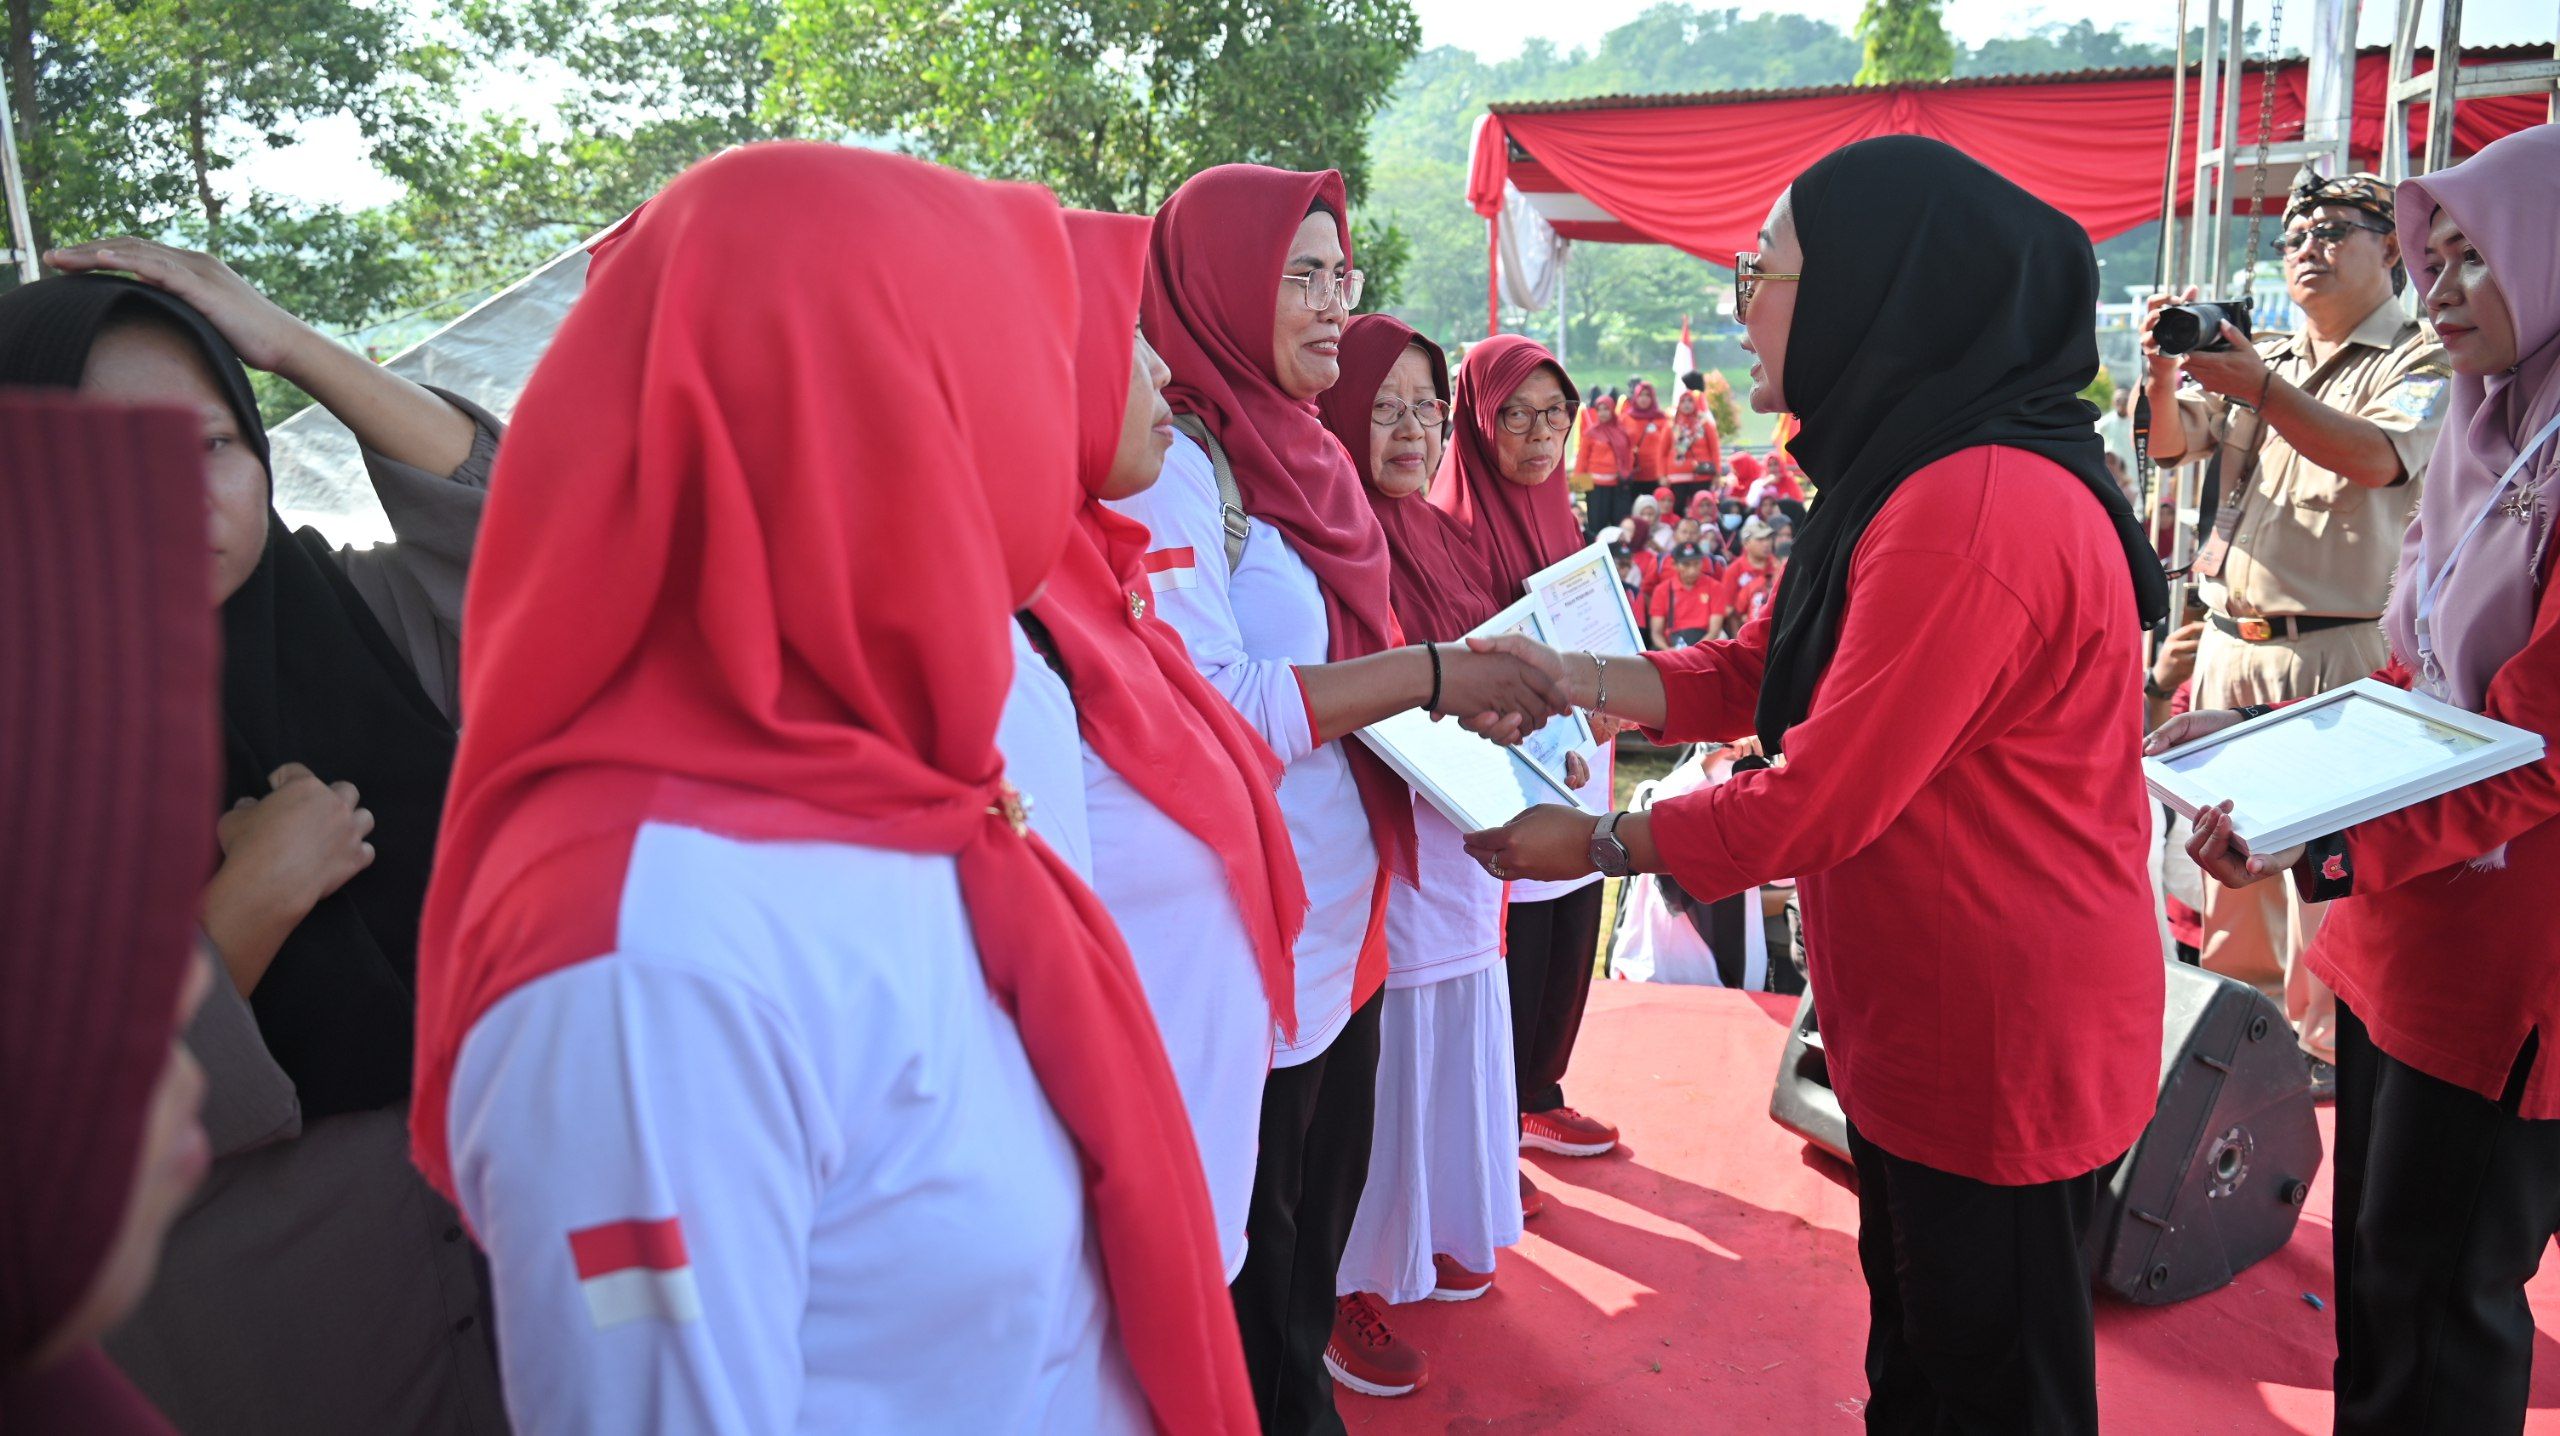 Bupati Tiwi hadiri kegiatan Germas di Desa Banjaran Kecamatan Bojongsari Purbalingga./Prokopim Purbalingga